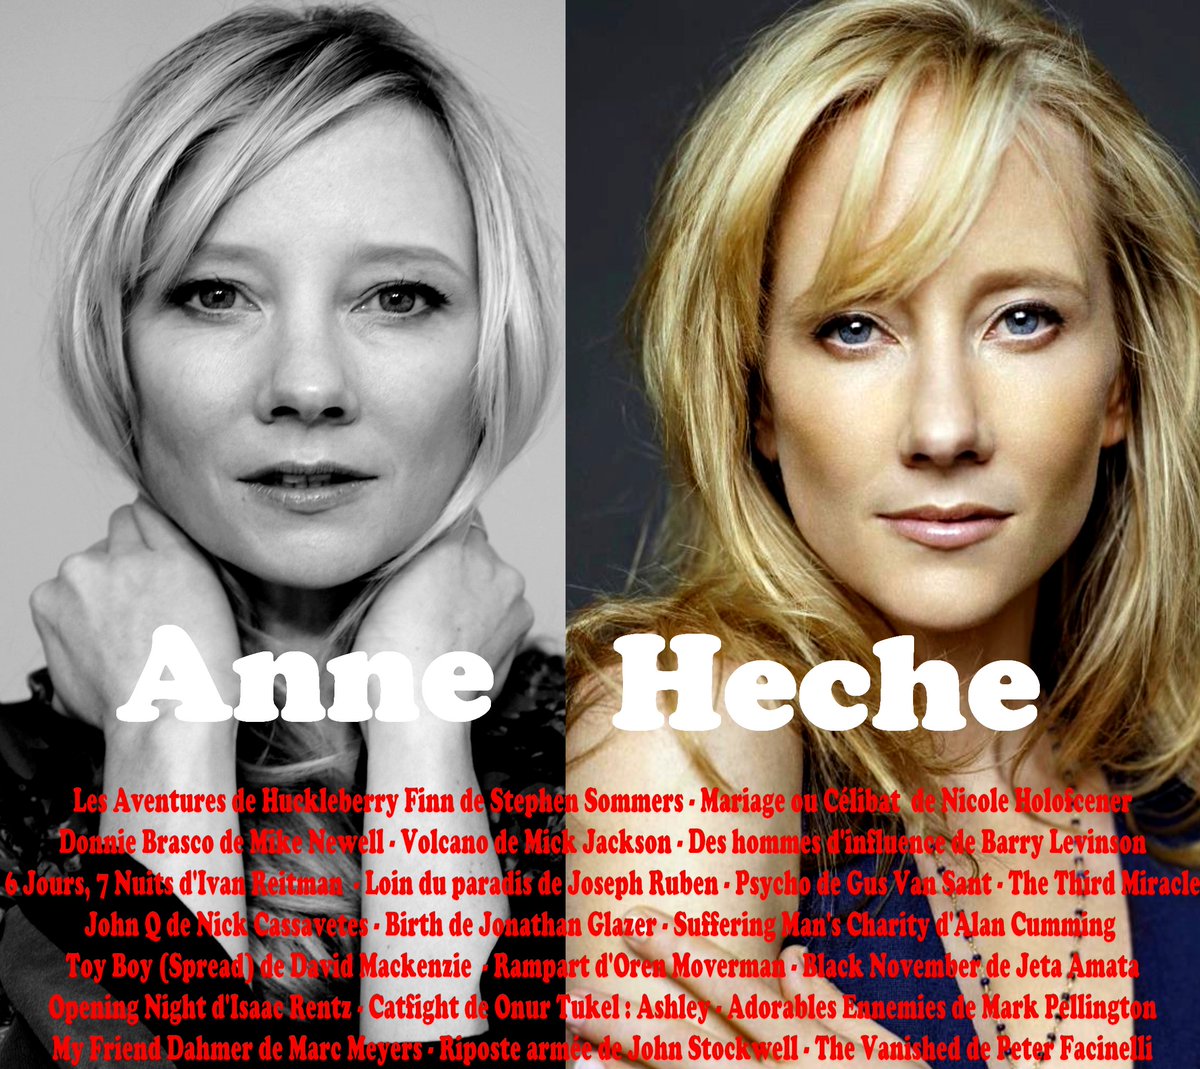 𝐀𝐧𝐧𝐞 𝐇𝐞𝐜𝐡𝐞
Actrice Réalisatrice Scénariste 
Productrice Américaine ( 1969/𝟐𝟎𝟐𝟐 )

#AnneHeche #DonnieBrasco #Volcano #SixDaysSevenNights #Psycho